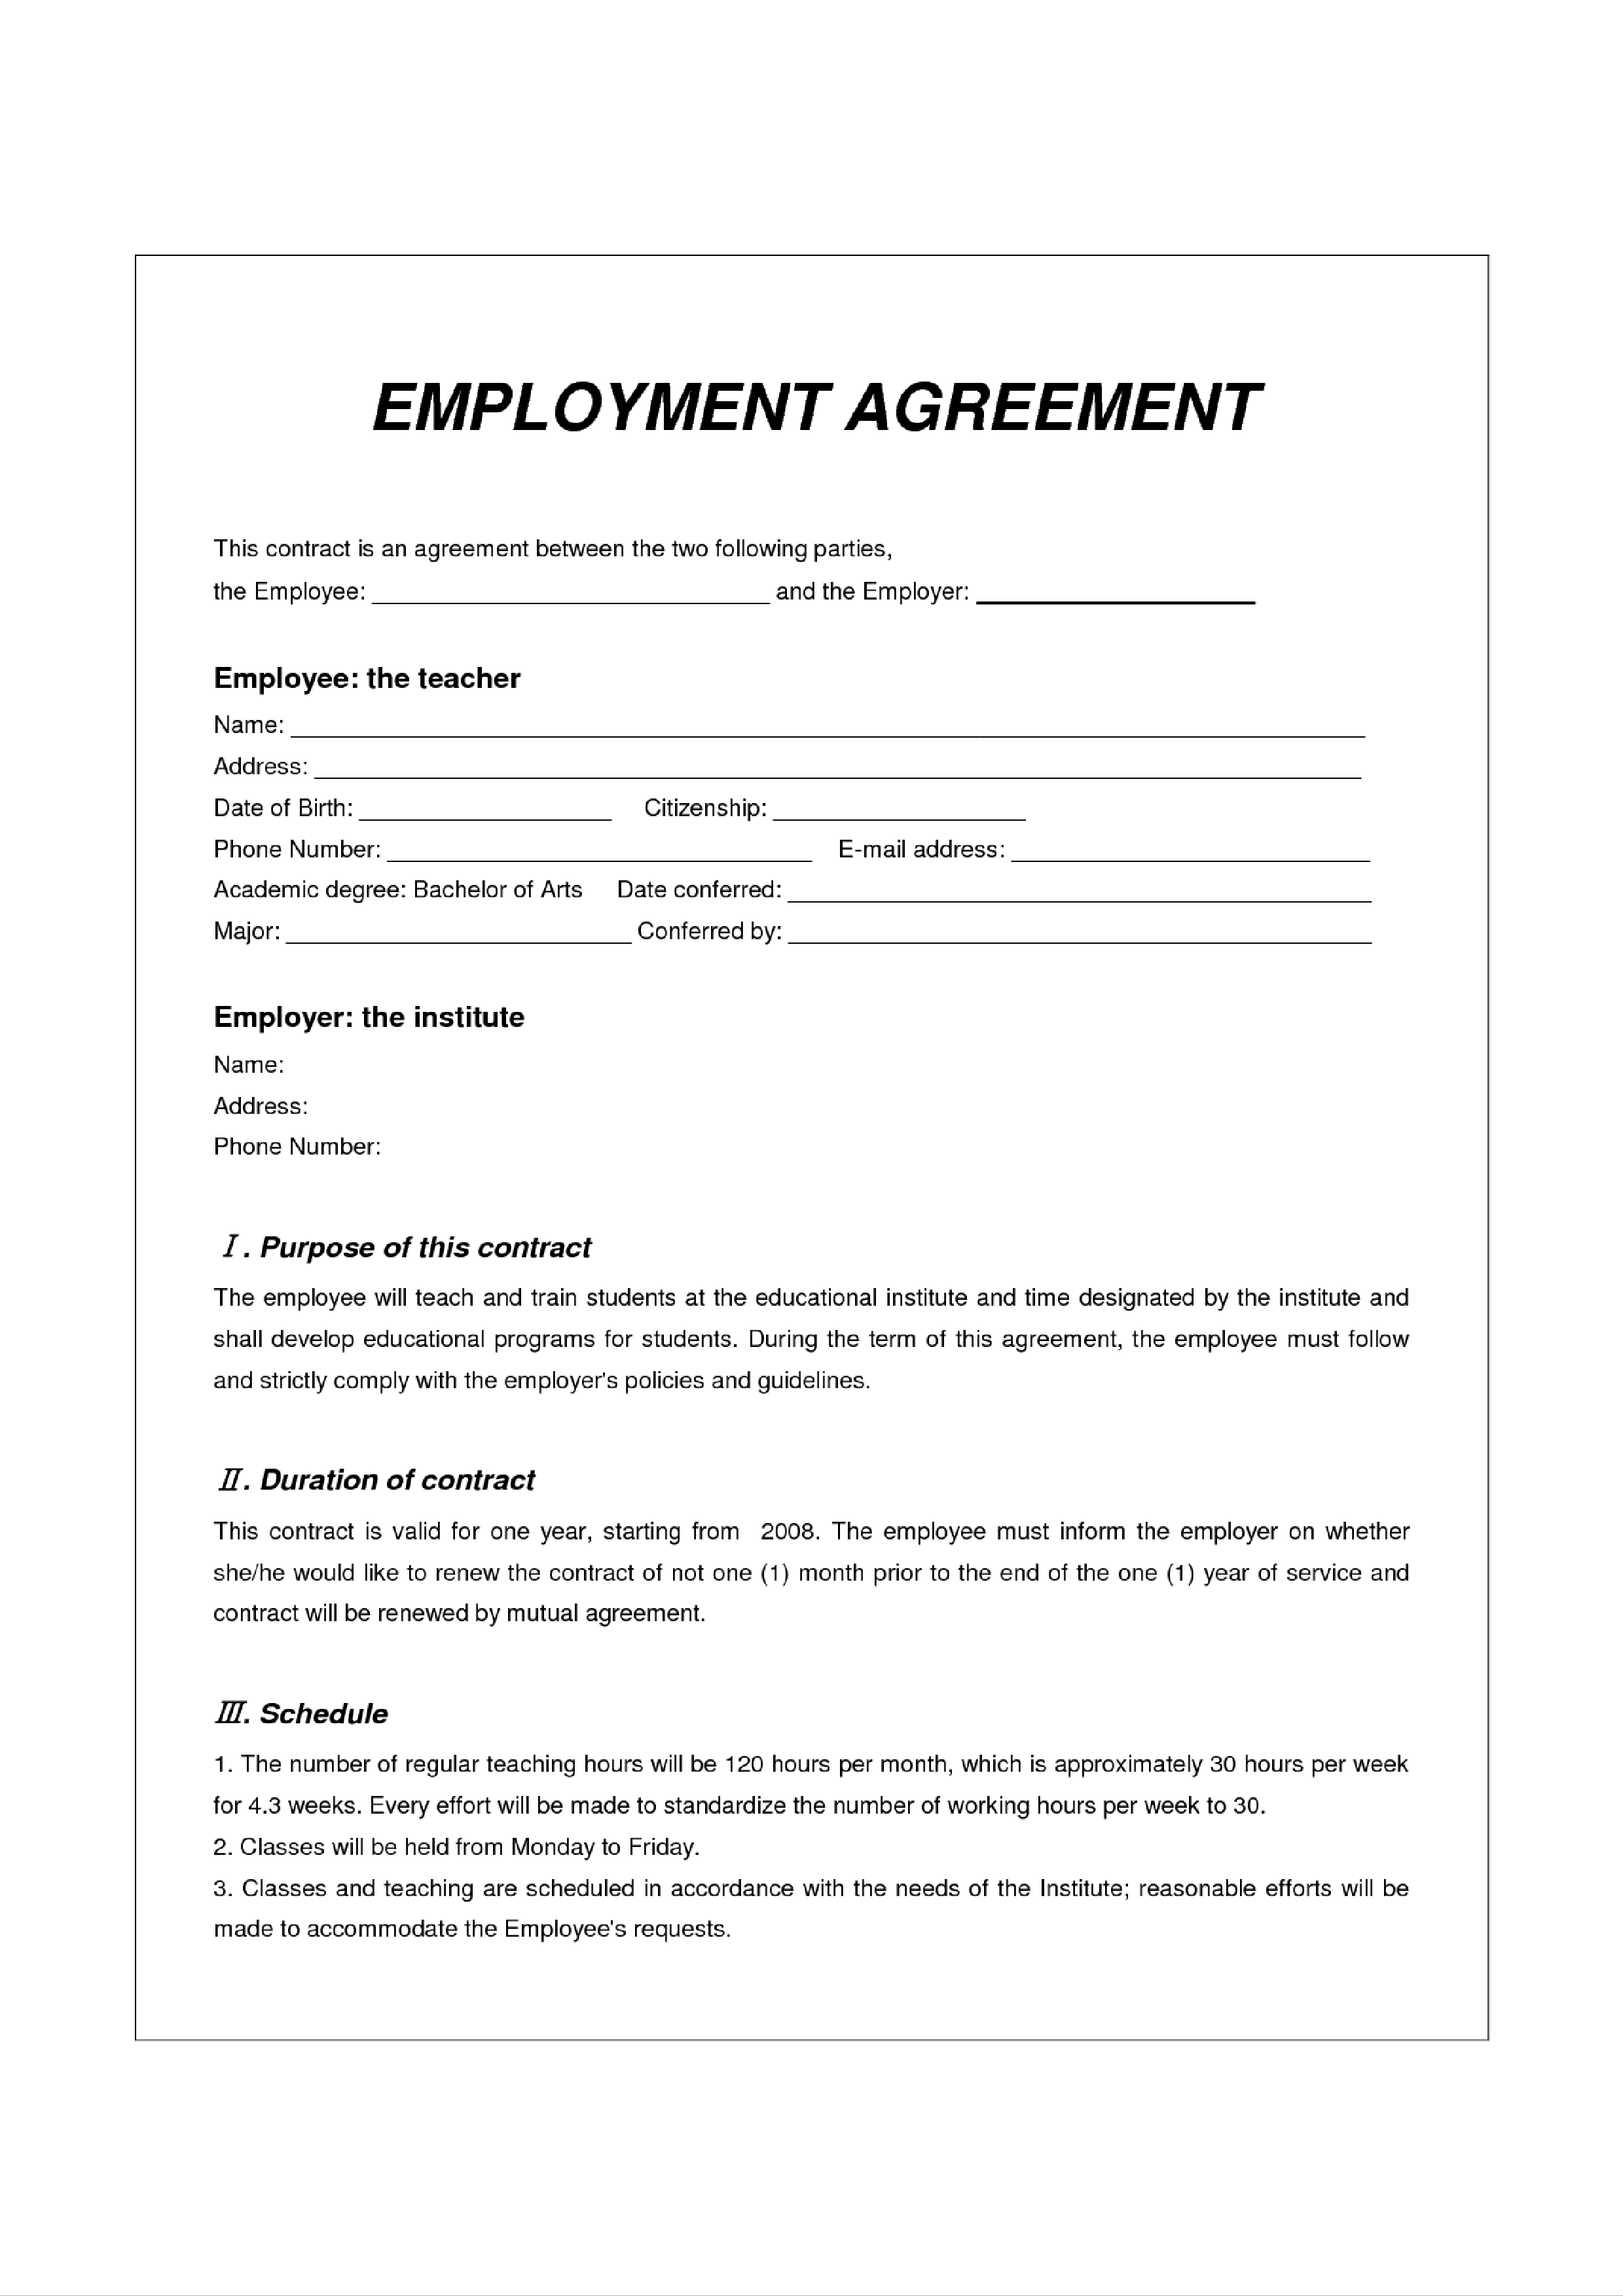 employment agreements cafe plantilla imagen principal